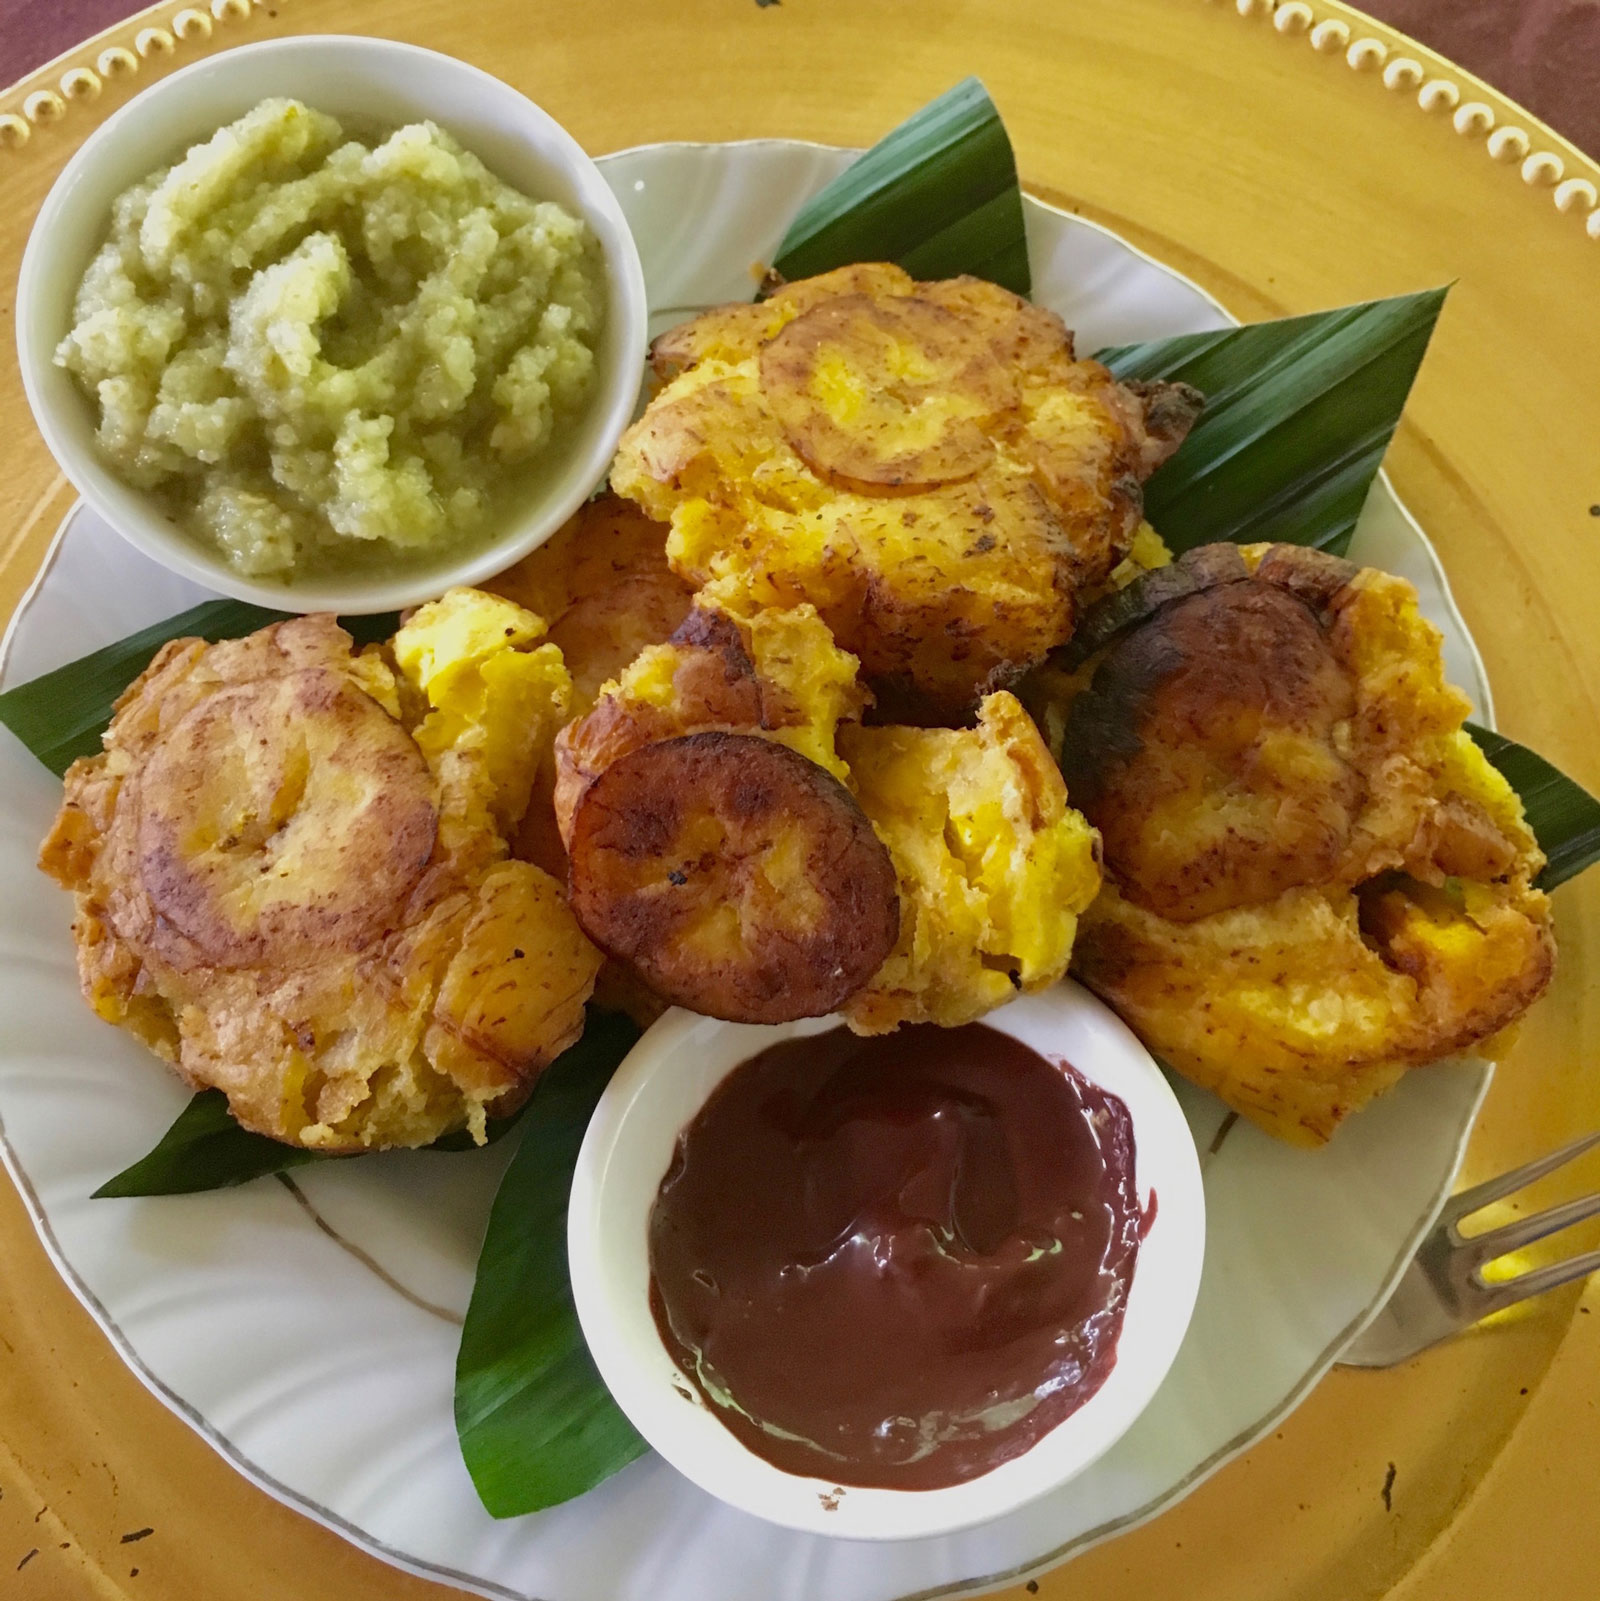 Farm to table eating - Trini style